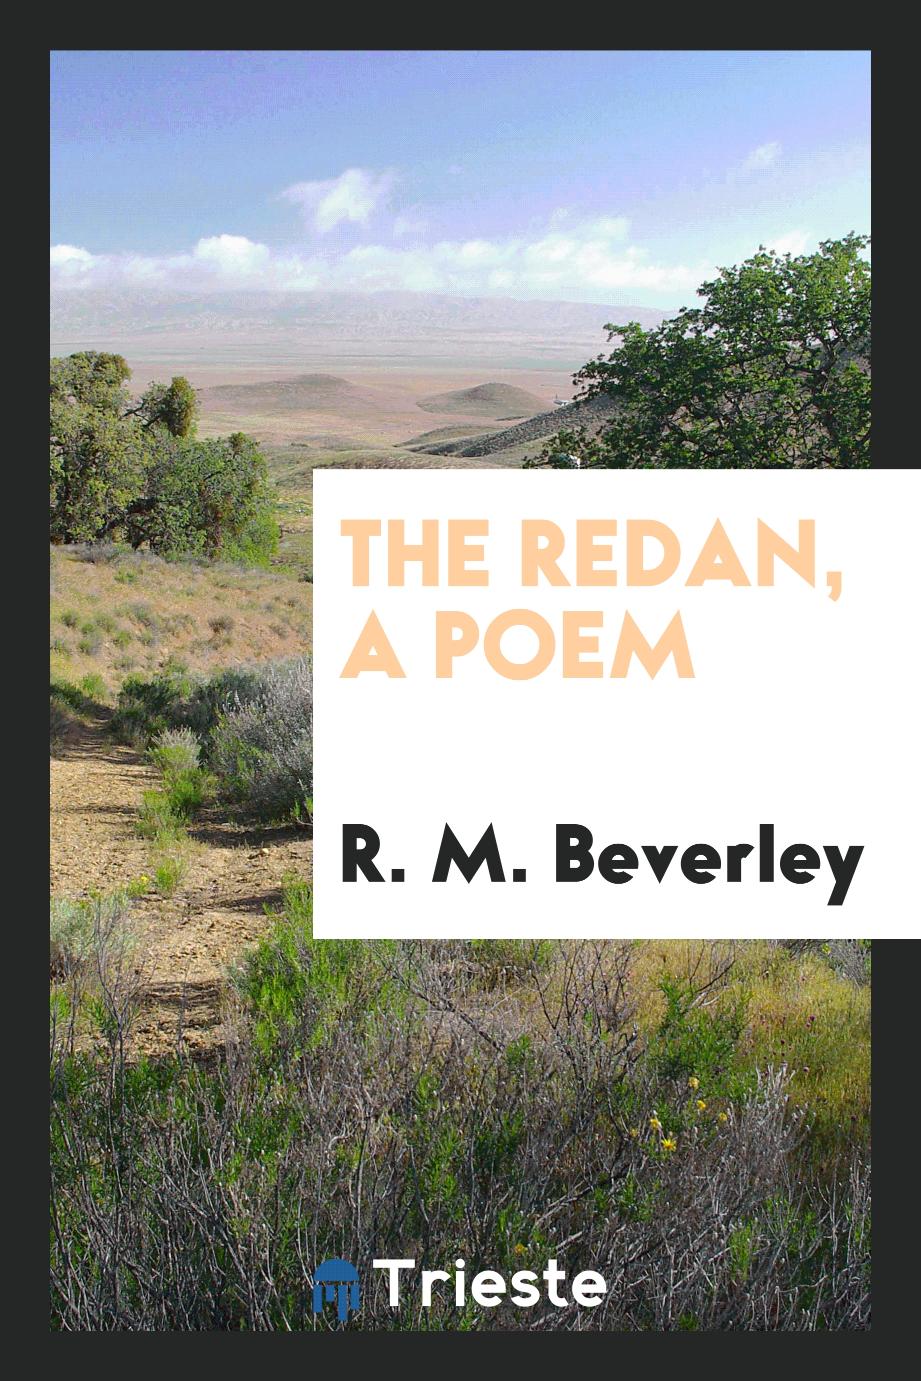 The Redan, a Poem